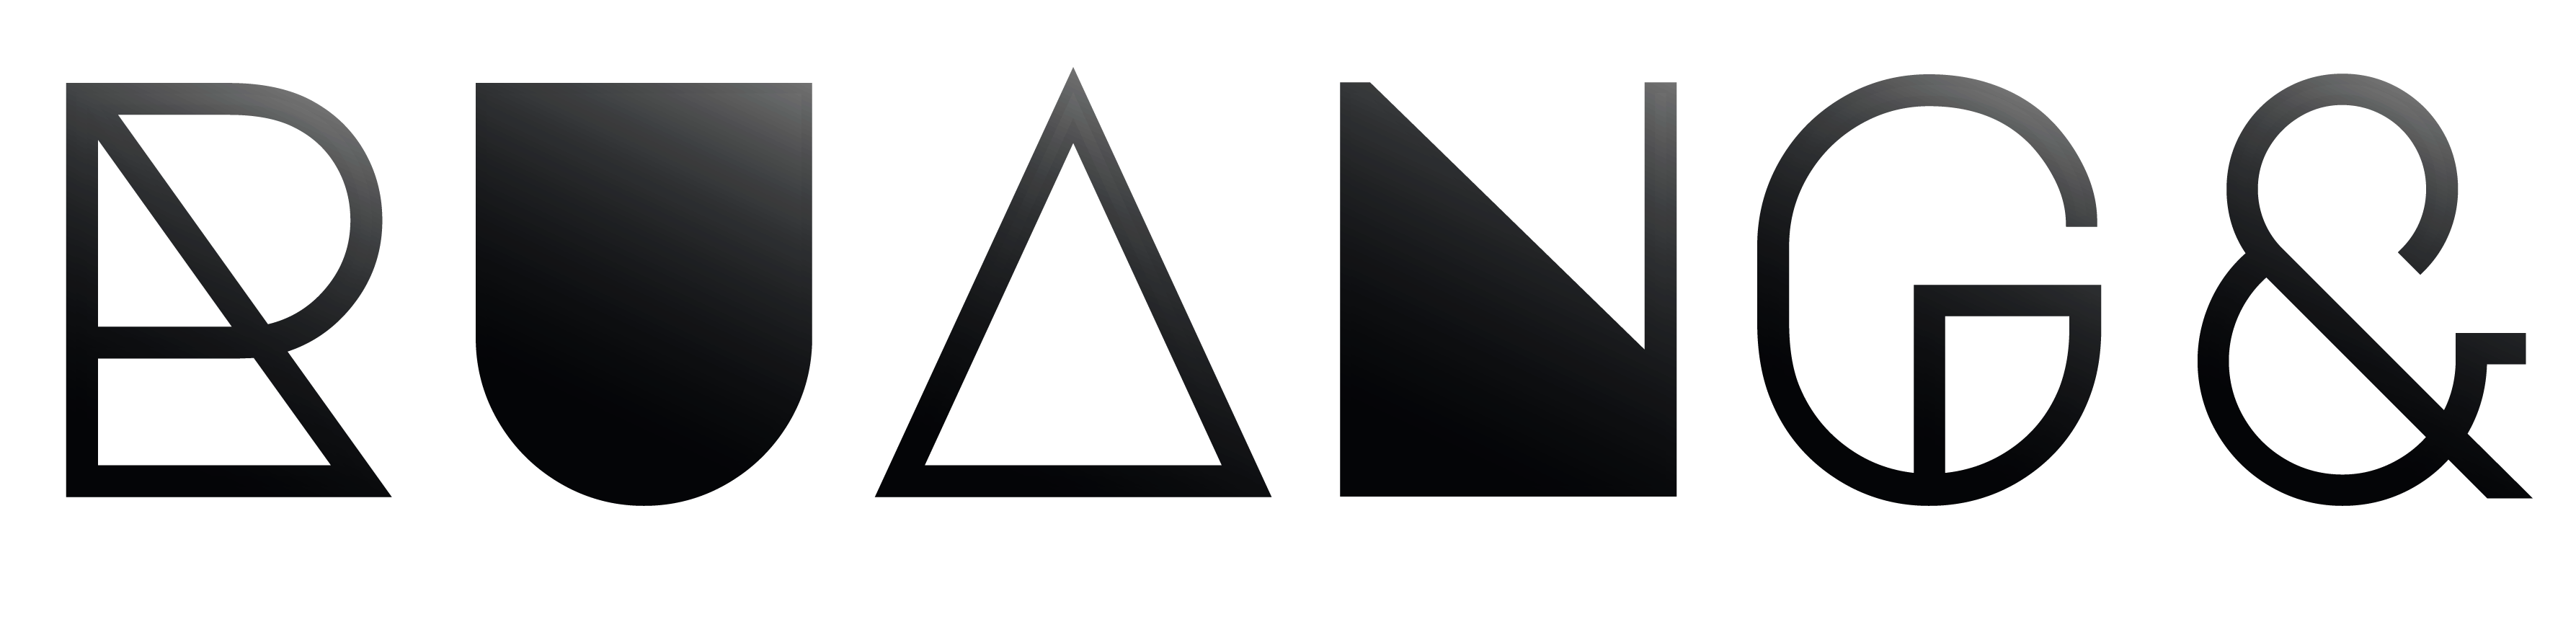 Ruang & logo horizontal (black) (1)